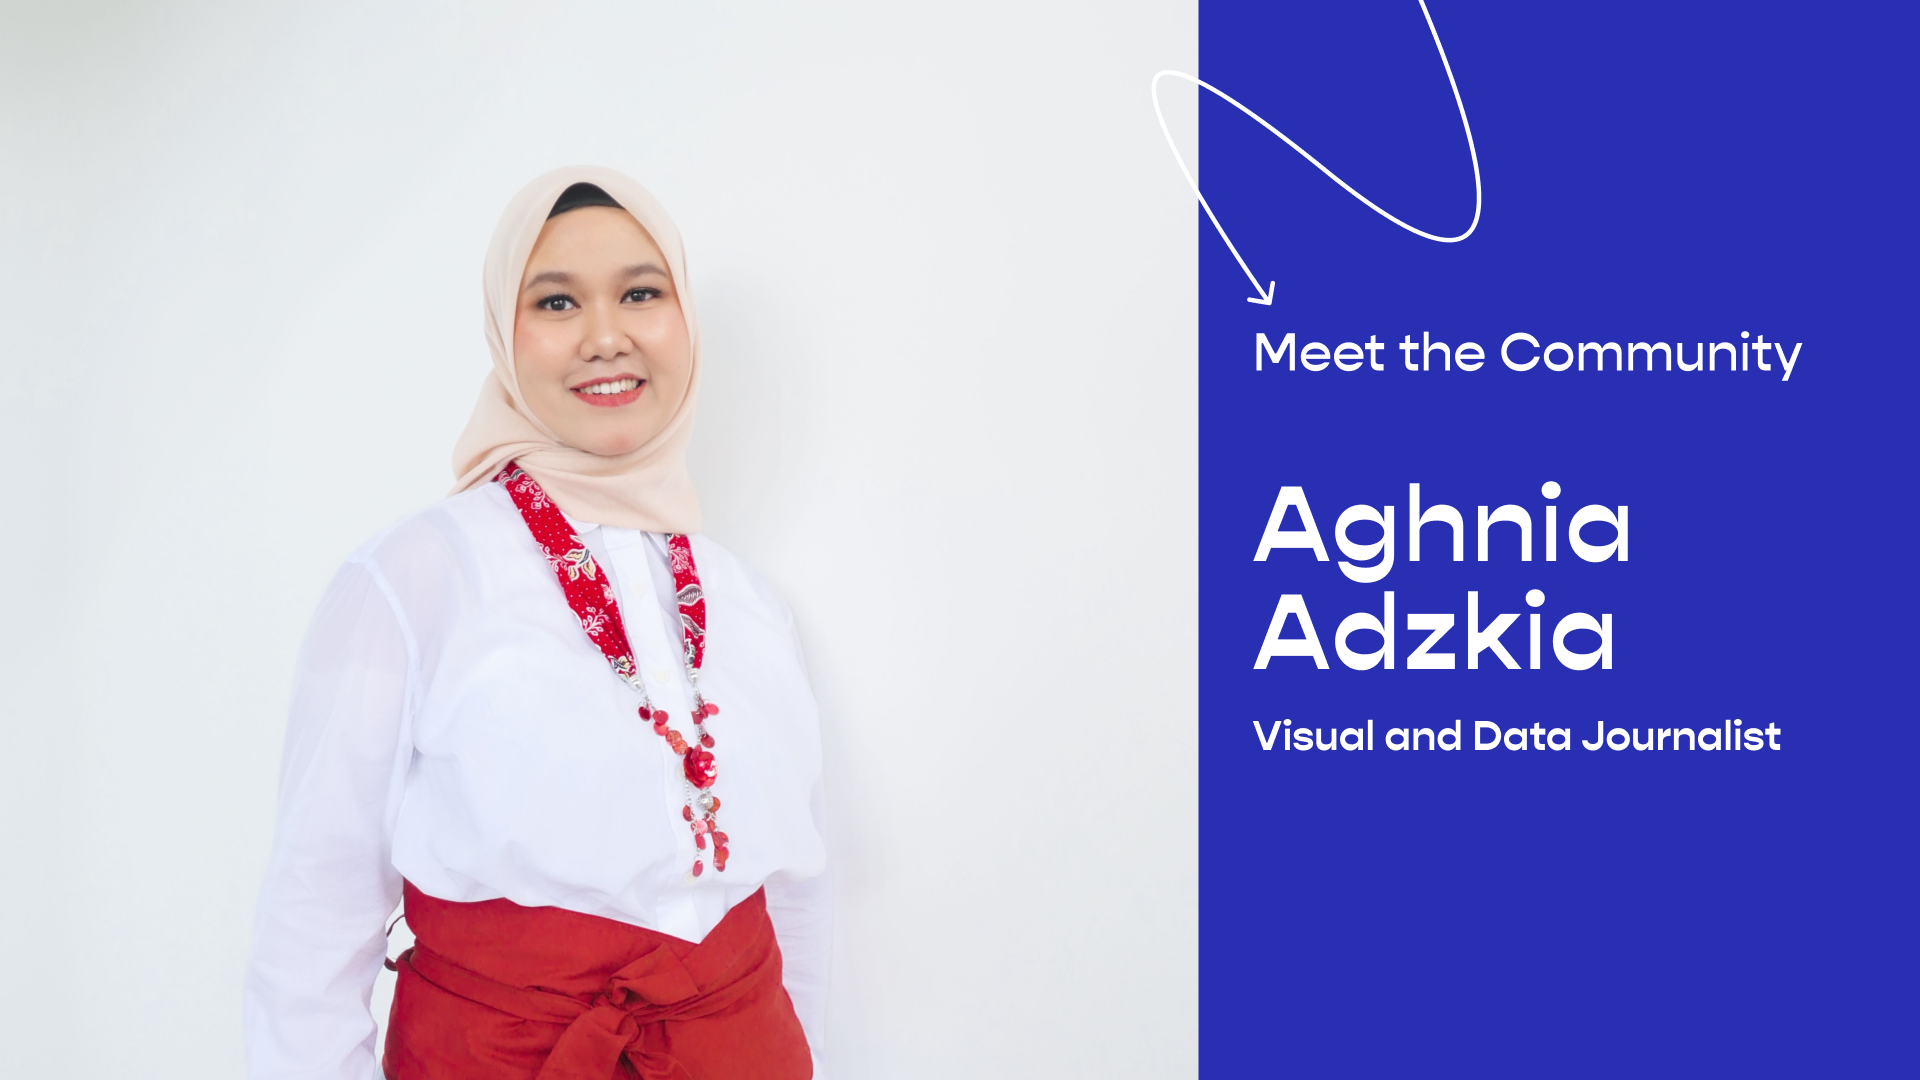 Meet the Community: Aghnia Adzkia, Visual and Data Journalist